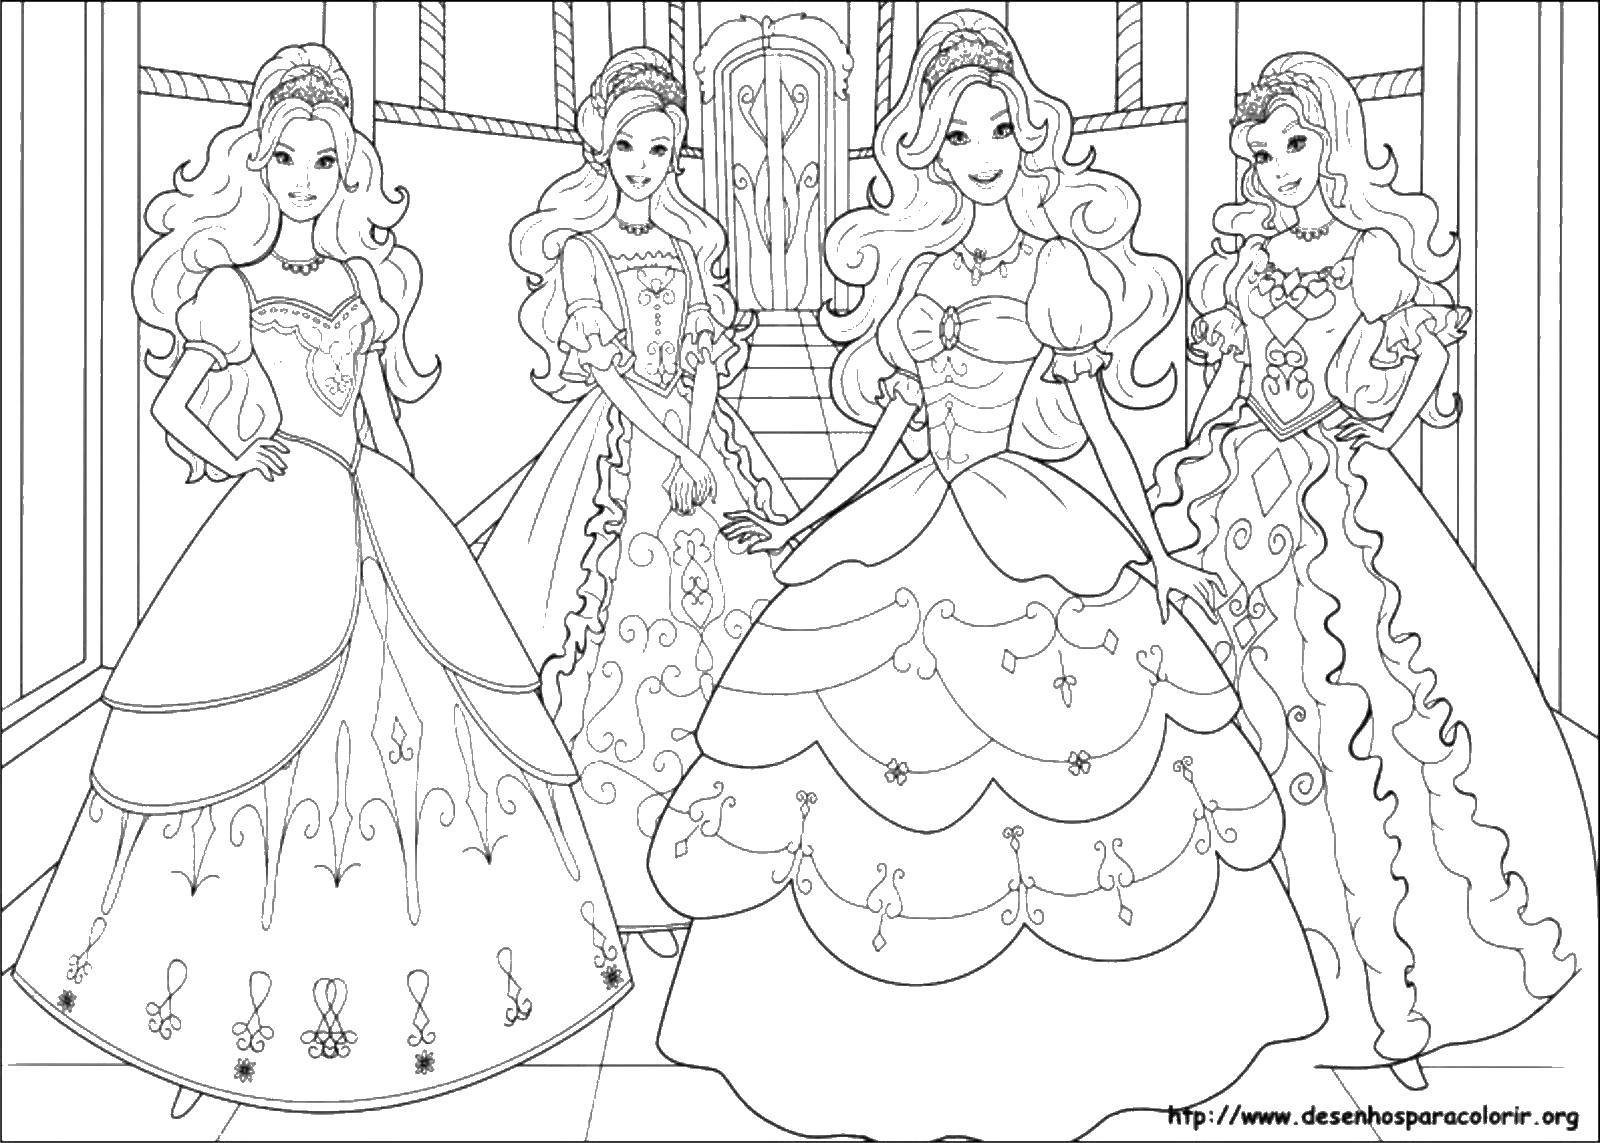 Название: Раскраска Барби на балу. Категория: Барби. Теги: барби, платья, короны, бал.